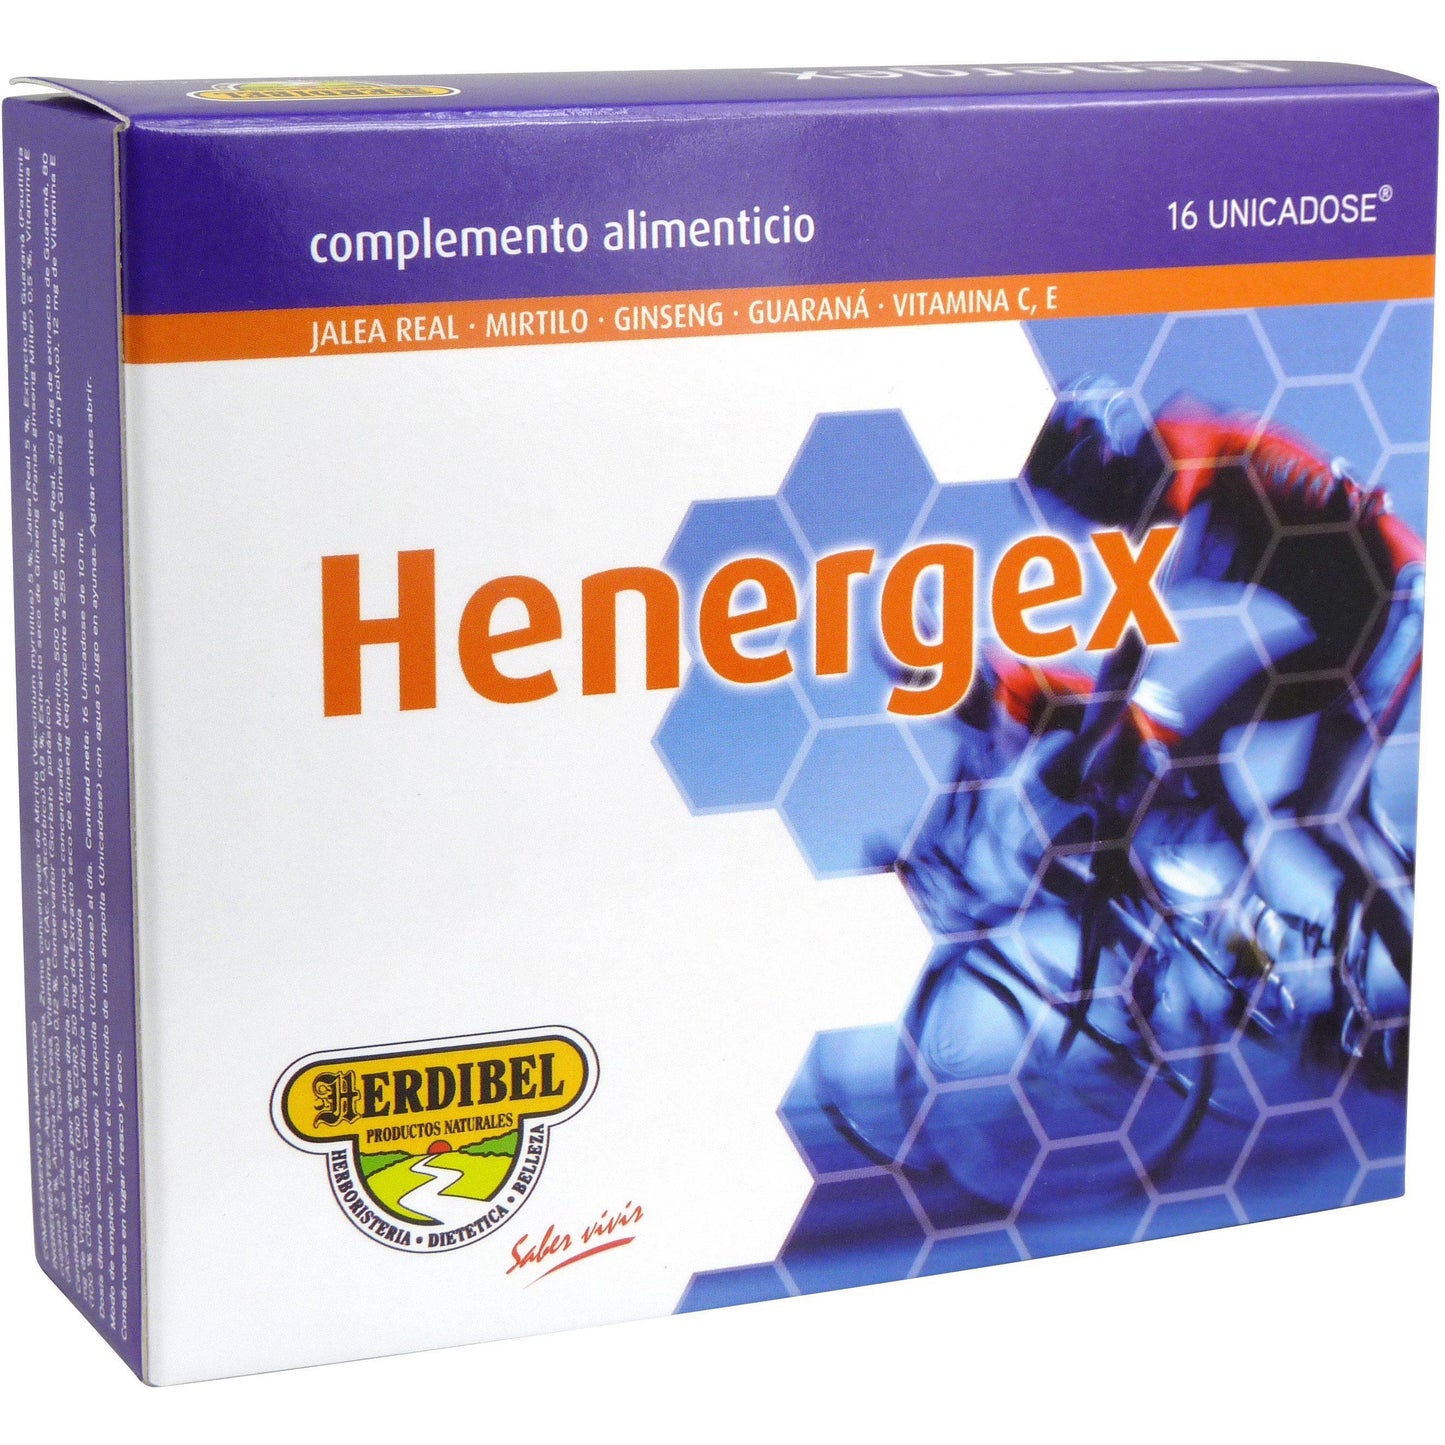 Henergex 16 Unicadose | Herdibel - Dietetica Ferrer